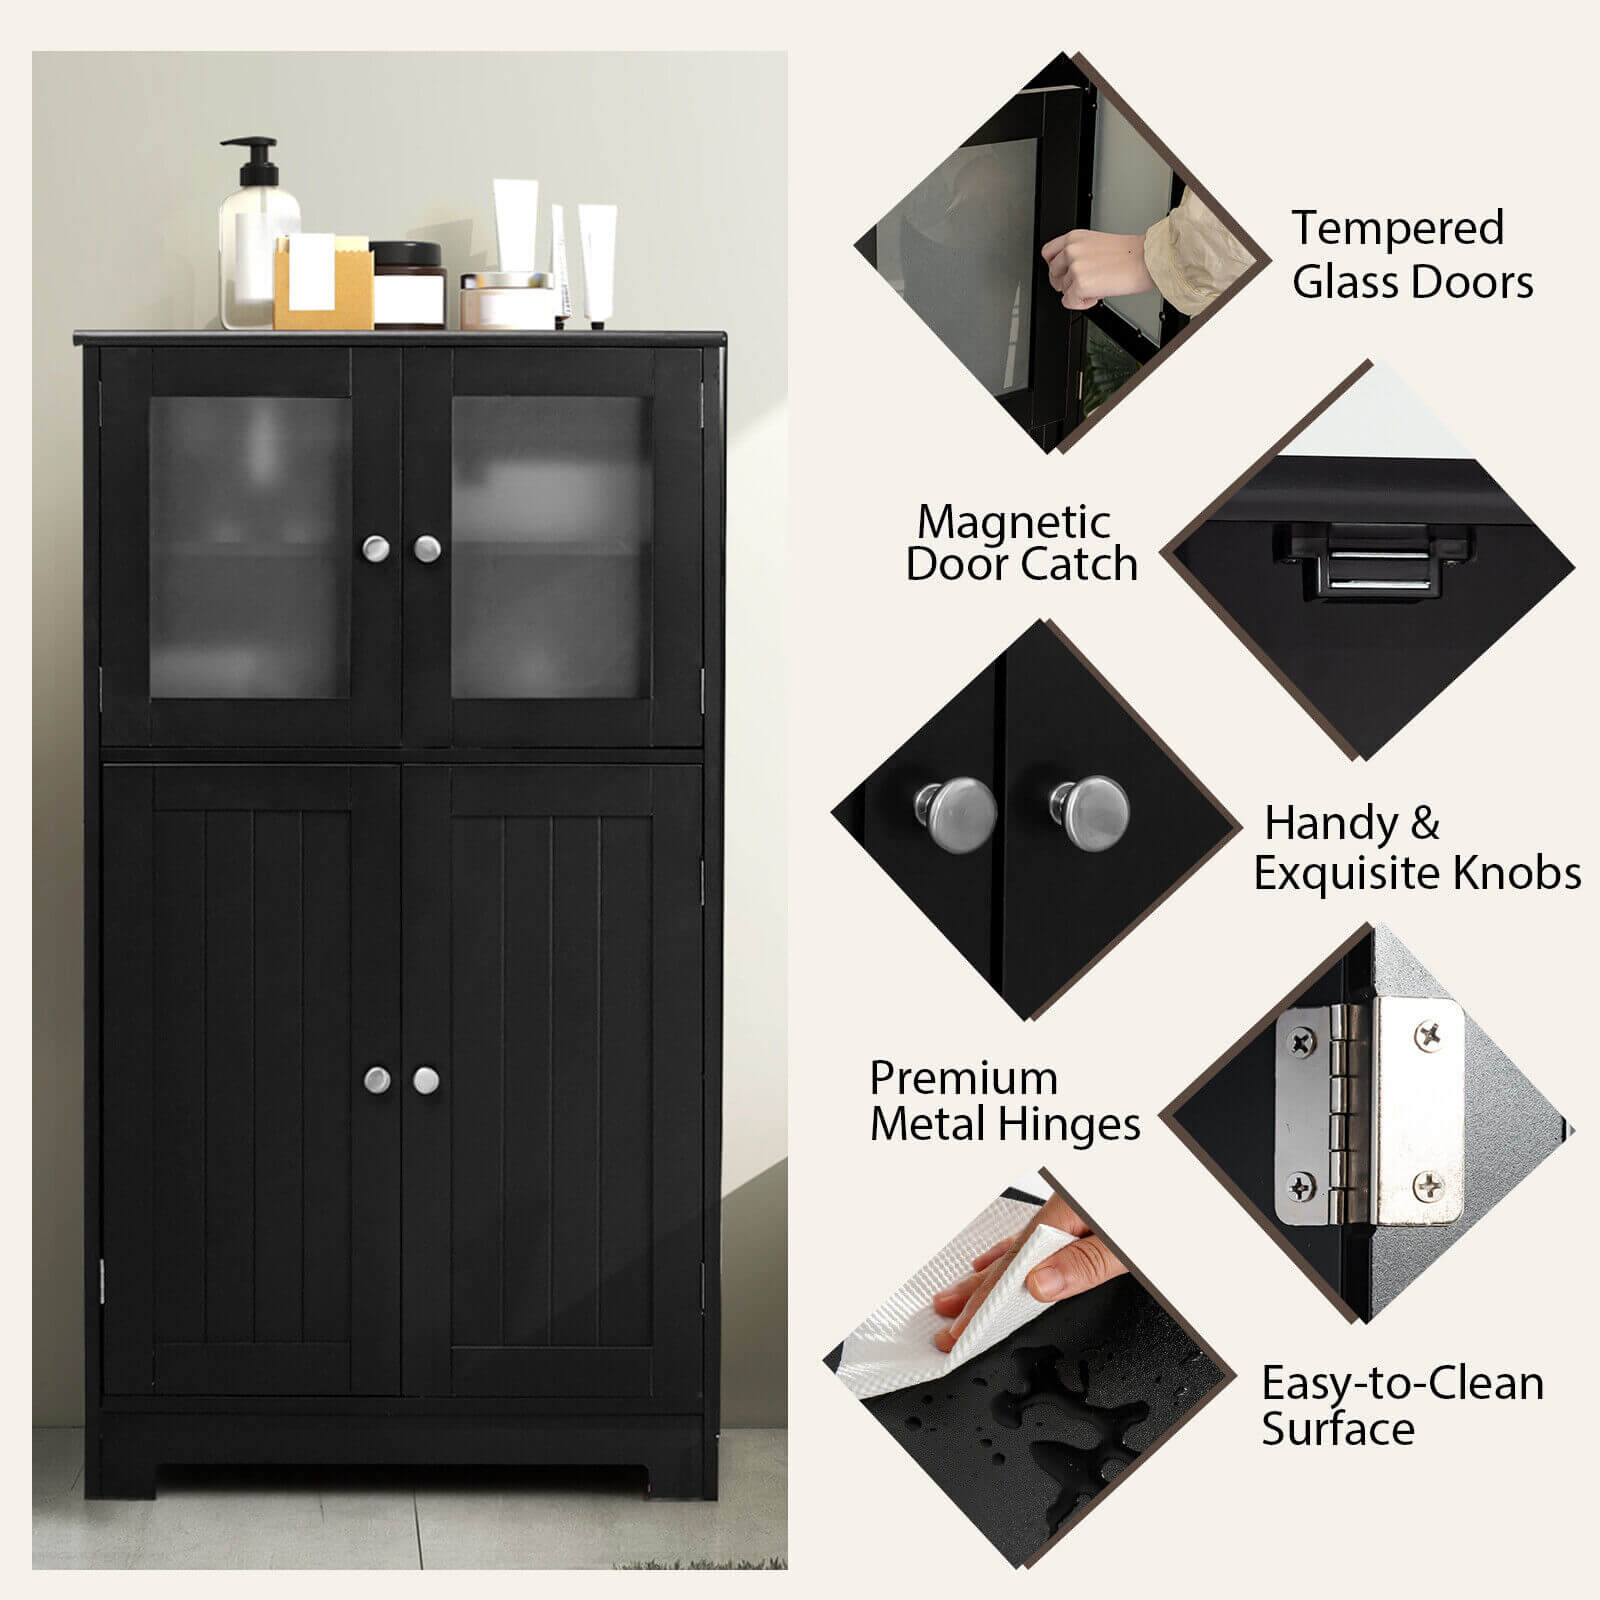 Bathroom Floor Storage Locker Kitchen Cabinet with Doors and Adjustable Shelf, Black - Gallery Canada